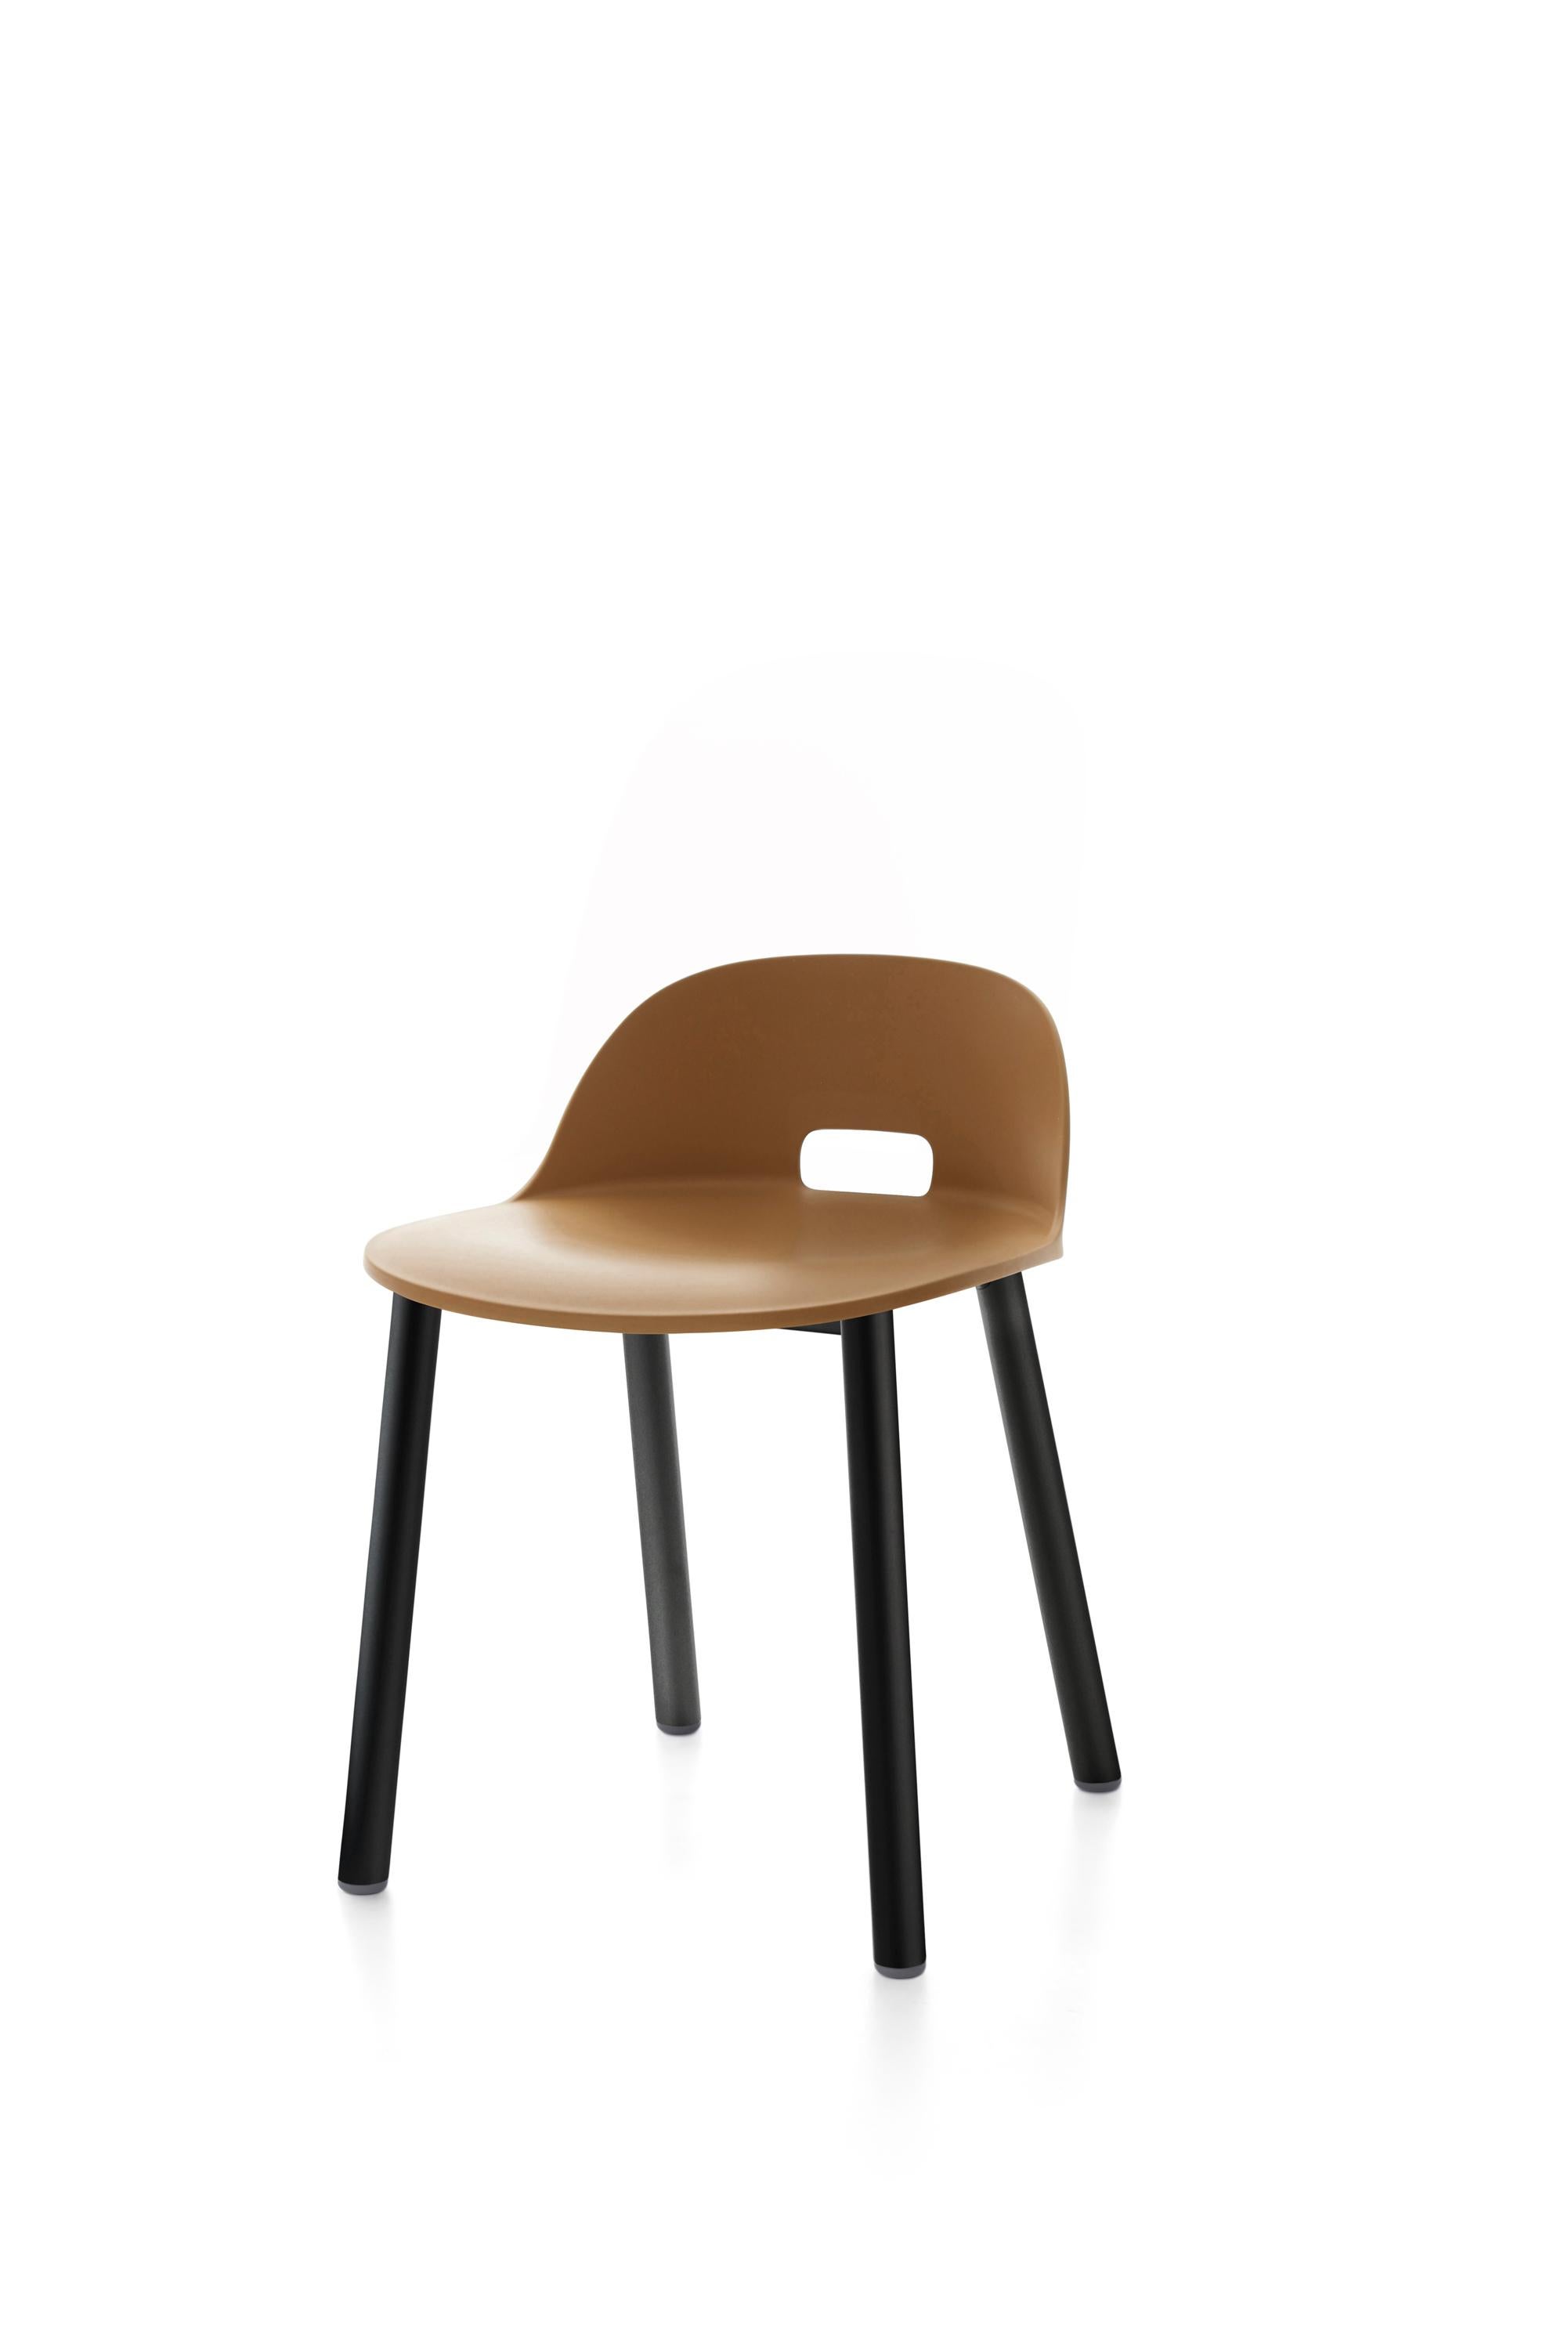 For Sale: Beige (Alfi Sand) Emeco Alfi Low Back Chair with Black Powder-Coated Aluminum Frame by Jasper